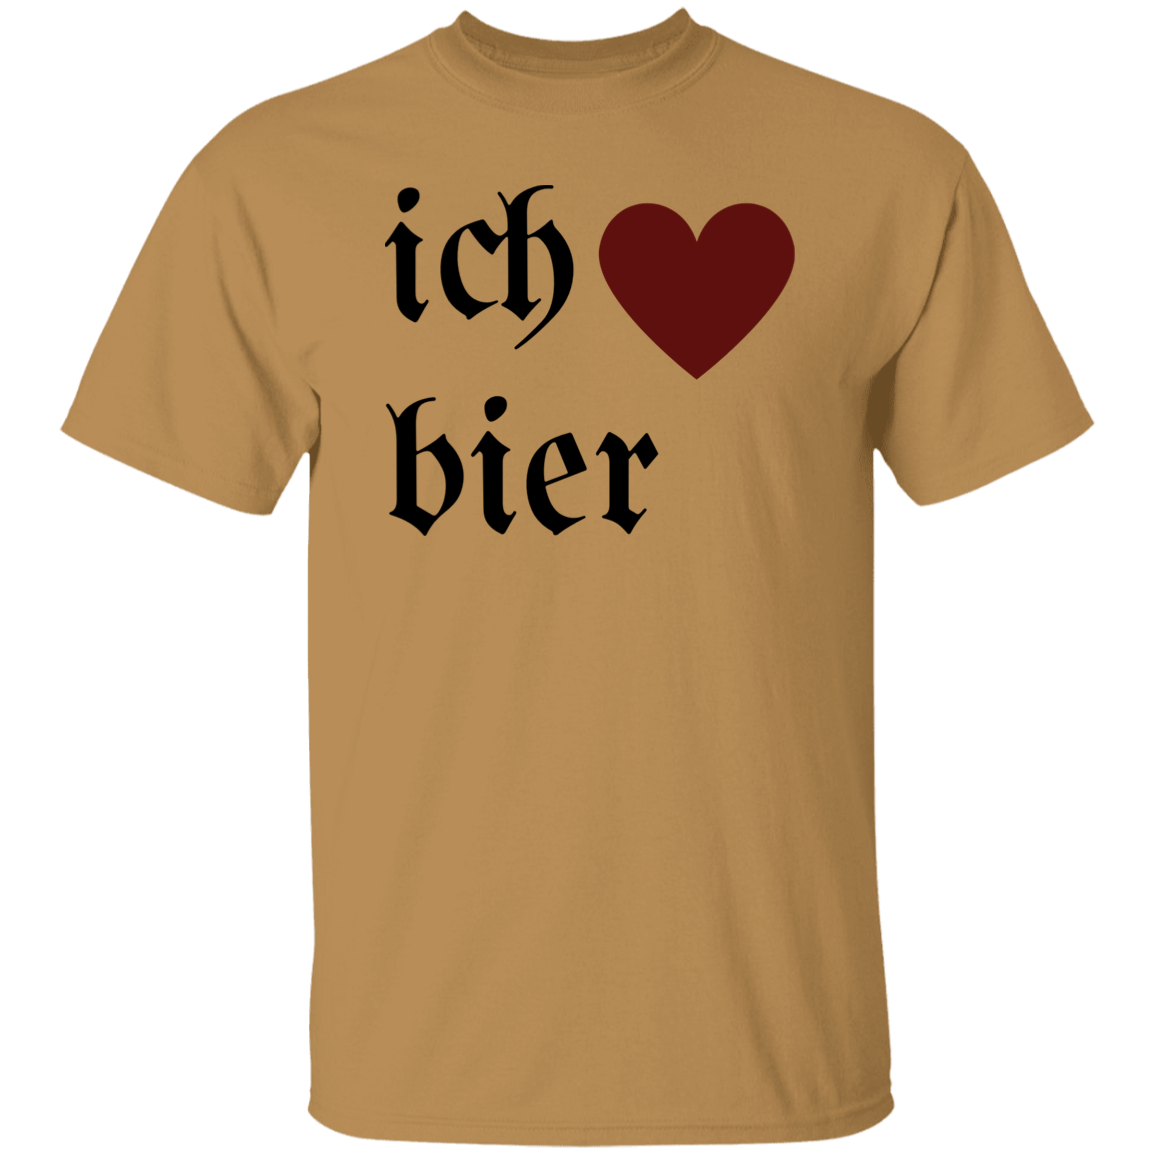 ich "heart" bier (I Love Beer) - Unisex T-Shirt